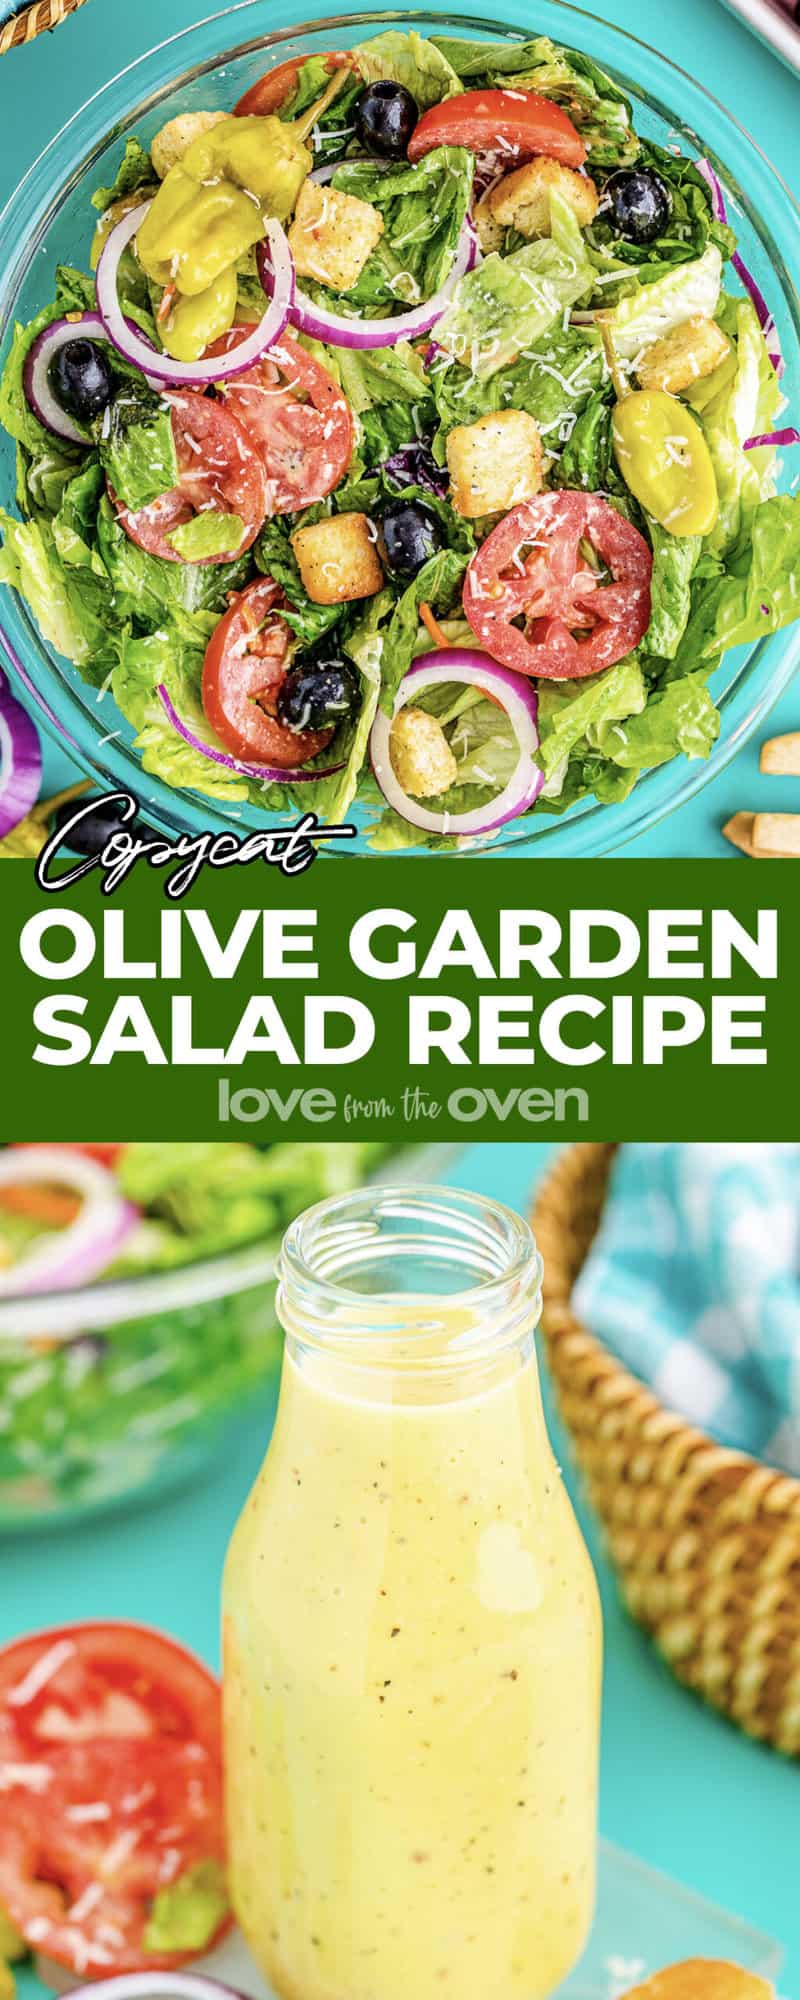 https://www.lovefromtheoven.com/wp-content/uploads/2023/01/copycat-olive-garden-salad-recipe-scaled.jpg